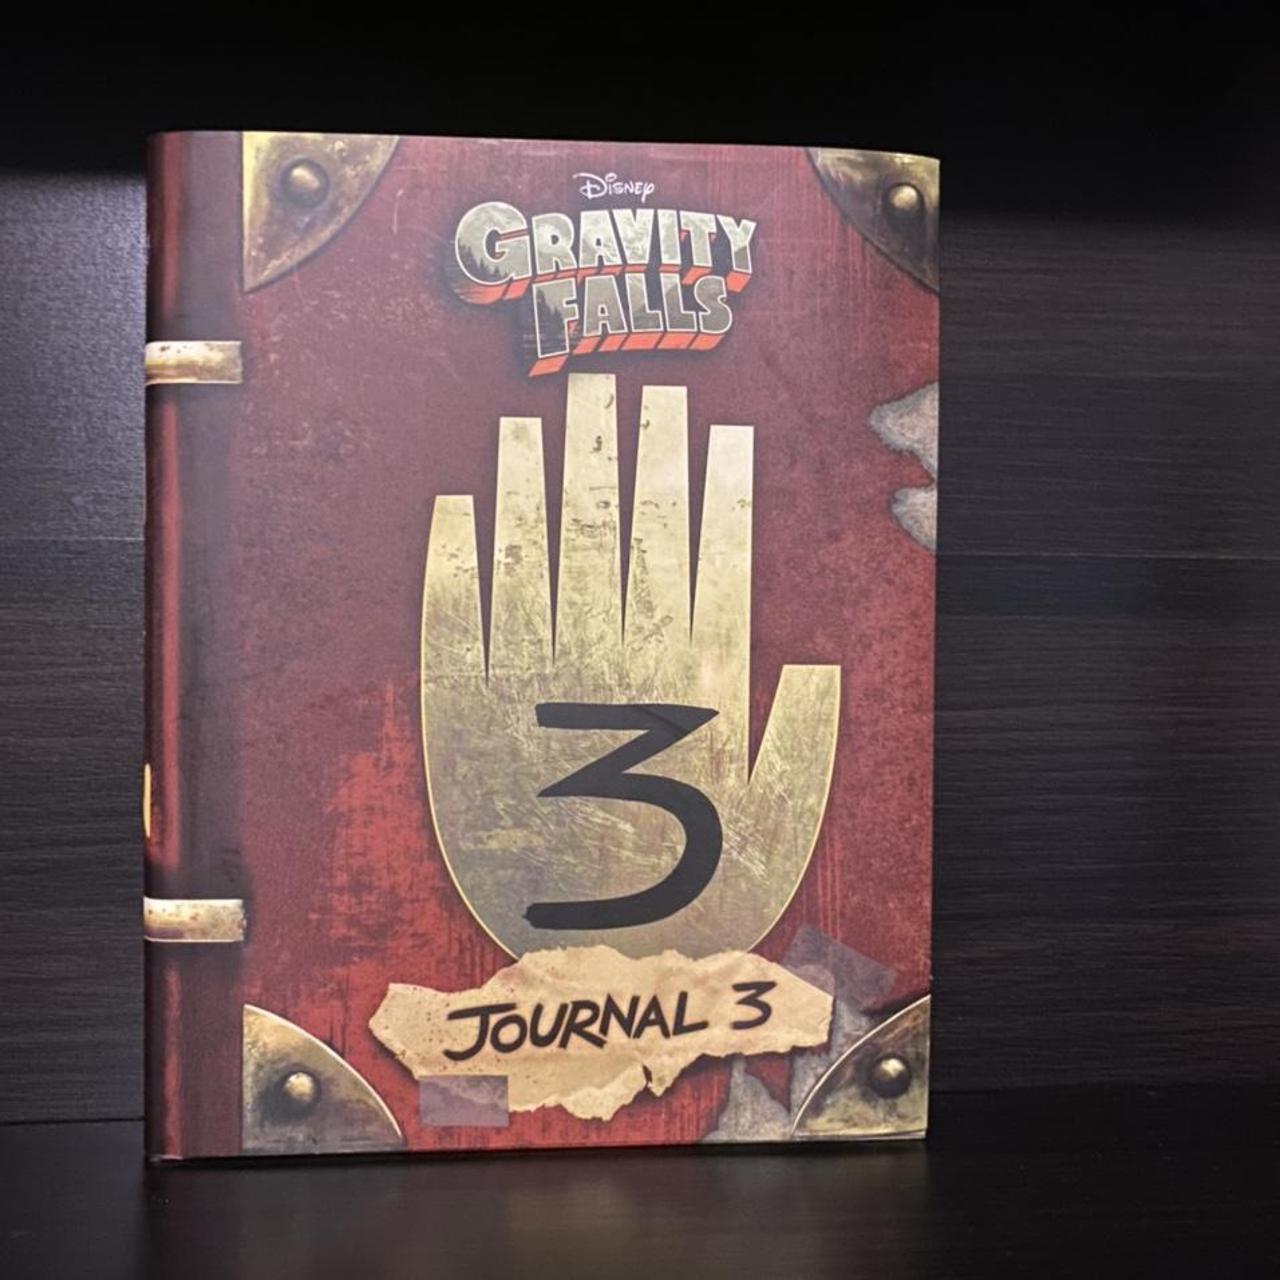 Gravity Falls:: Journal 3|Hardcover